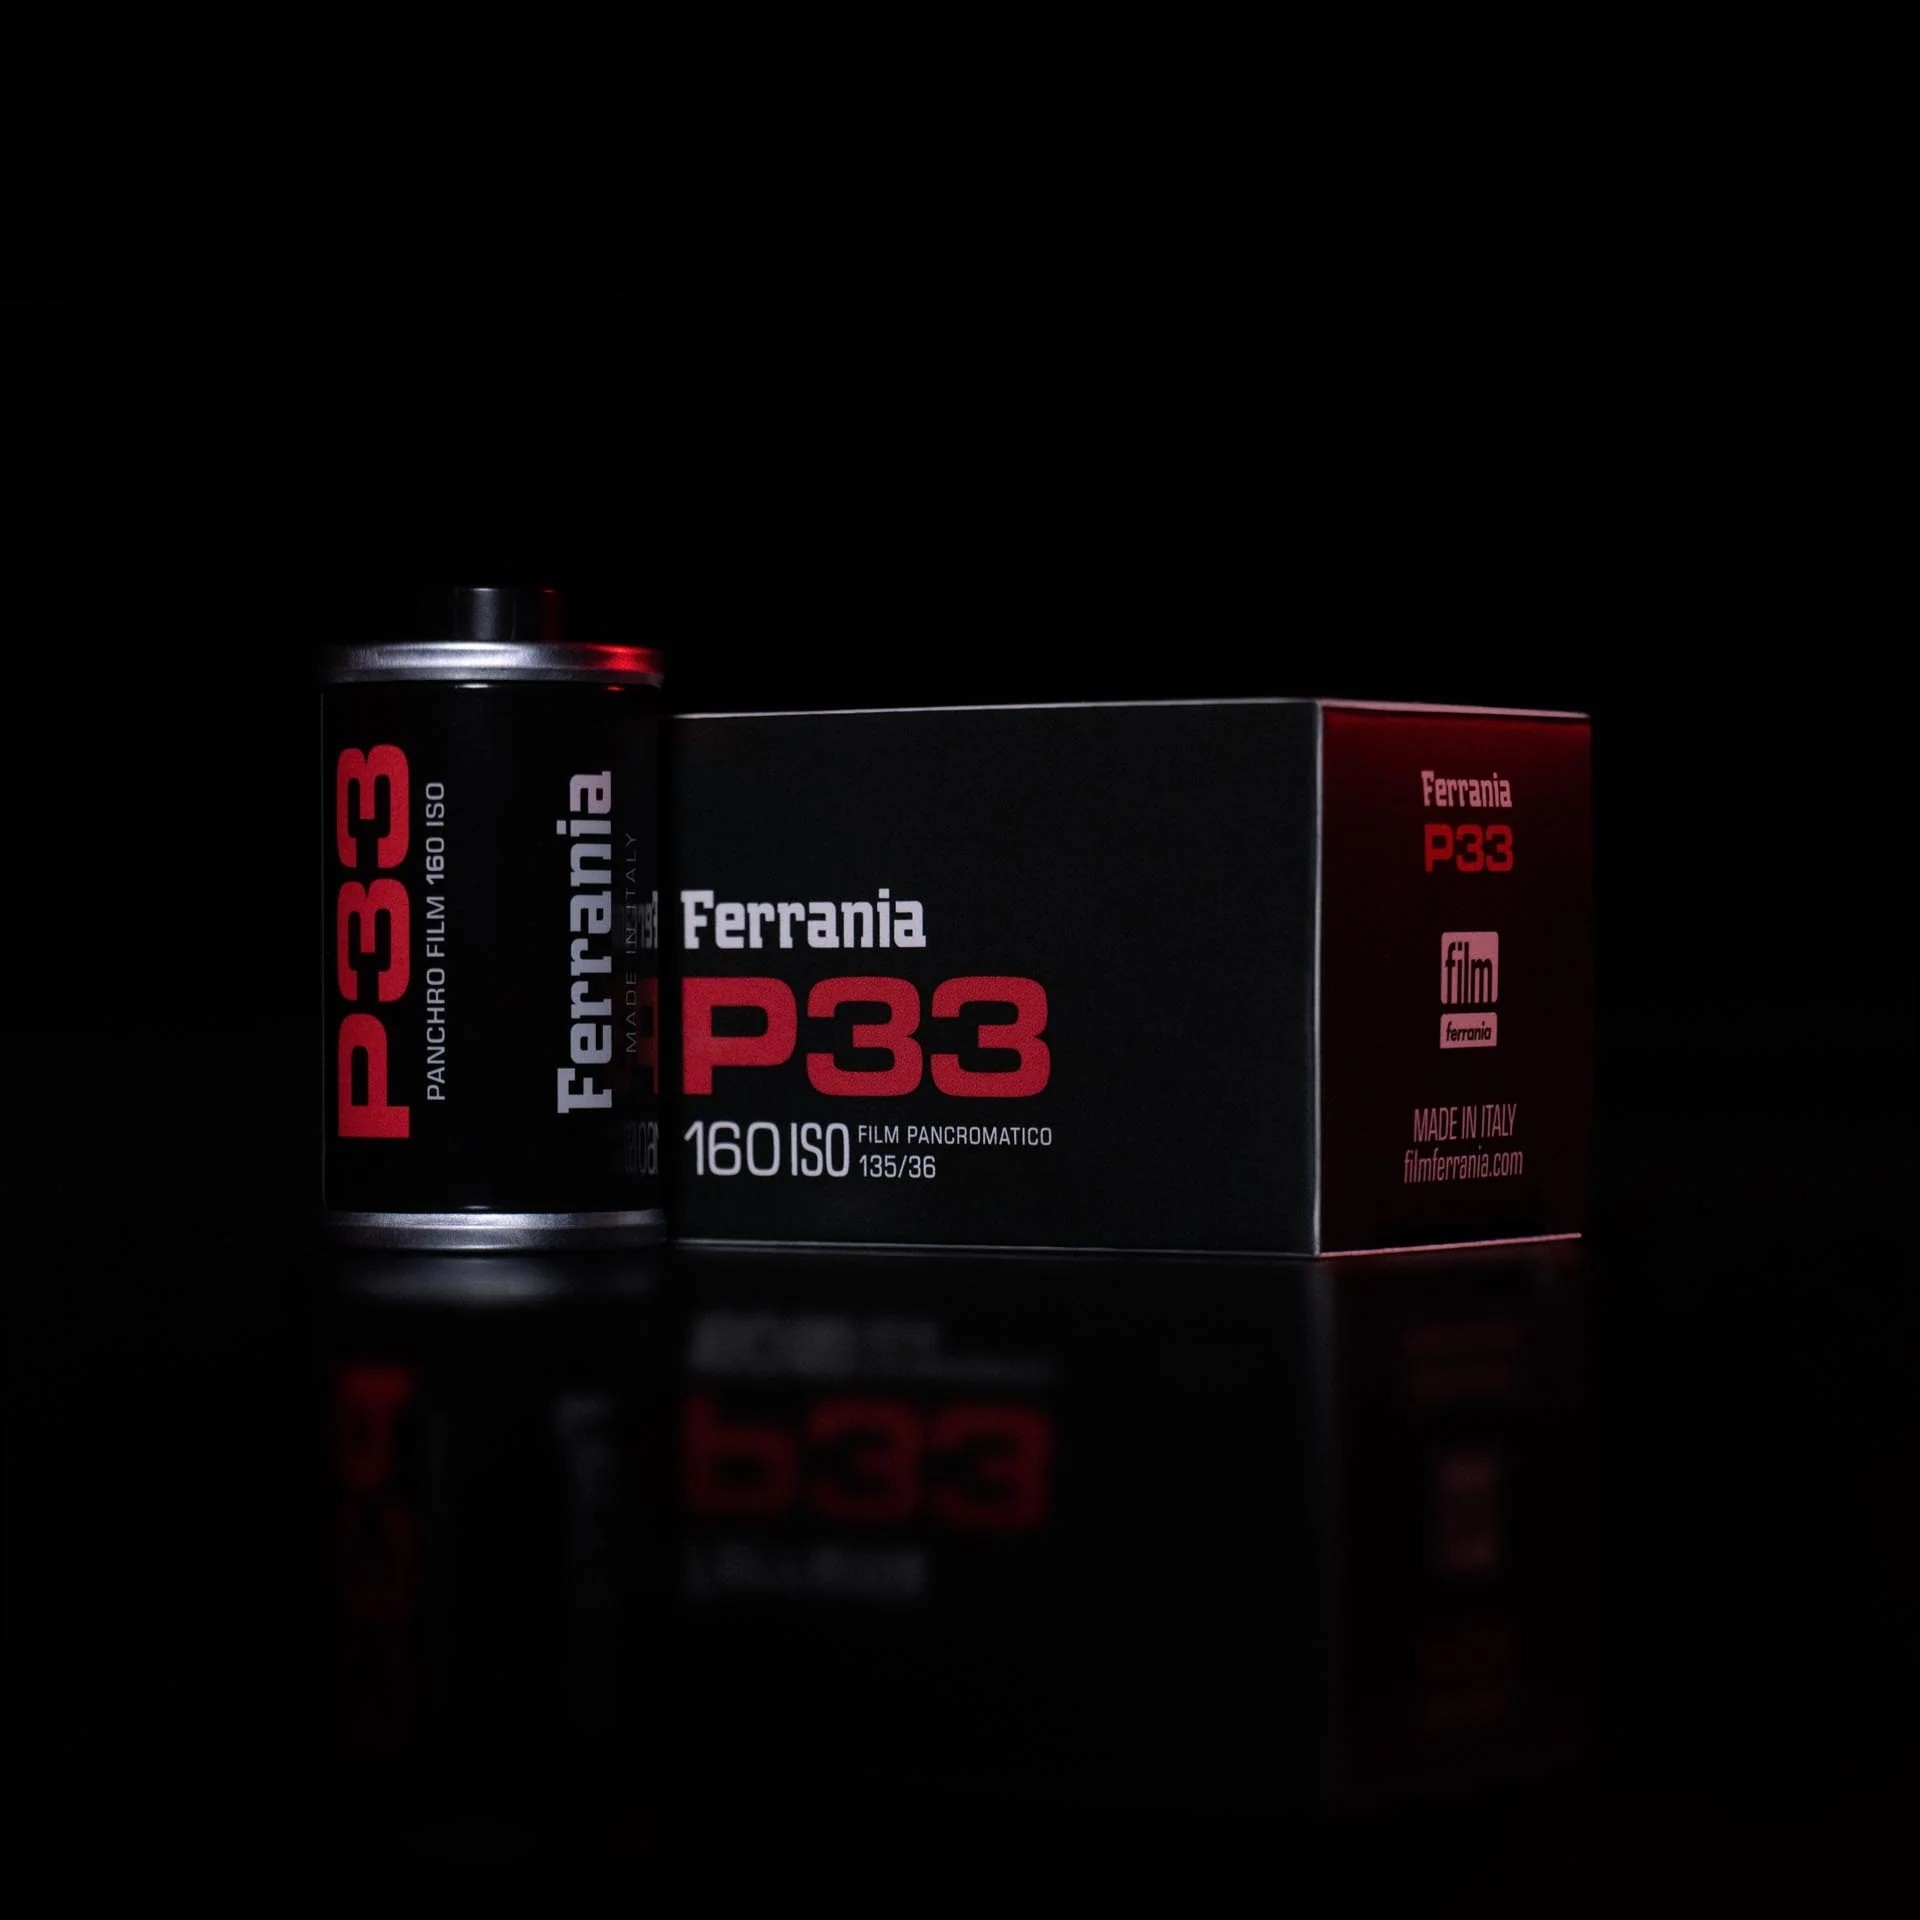 Film Ferrania P30 35mm film cartridge and box on black background